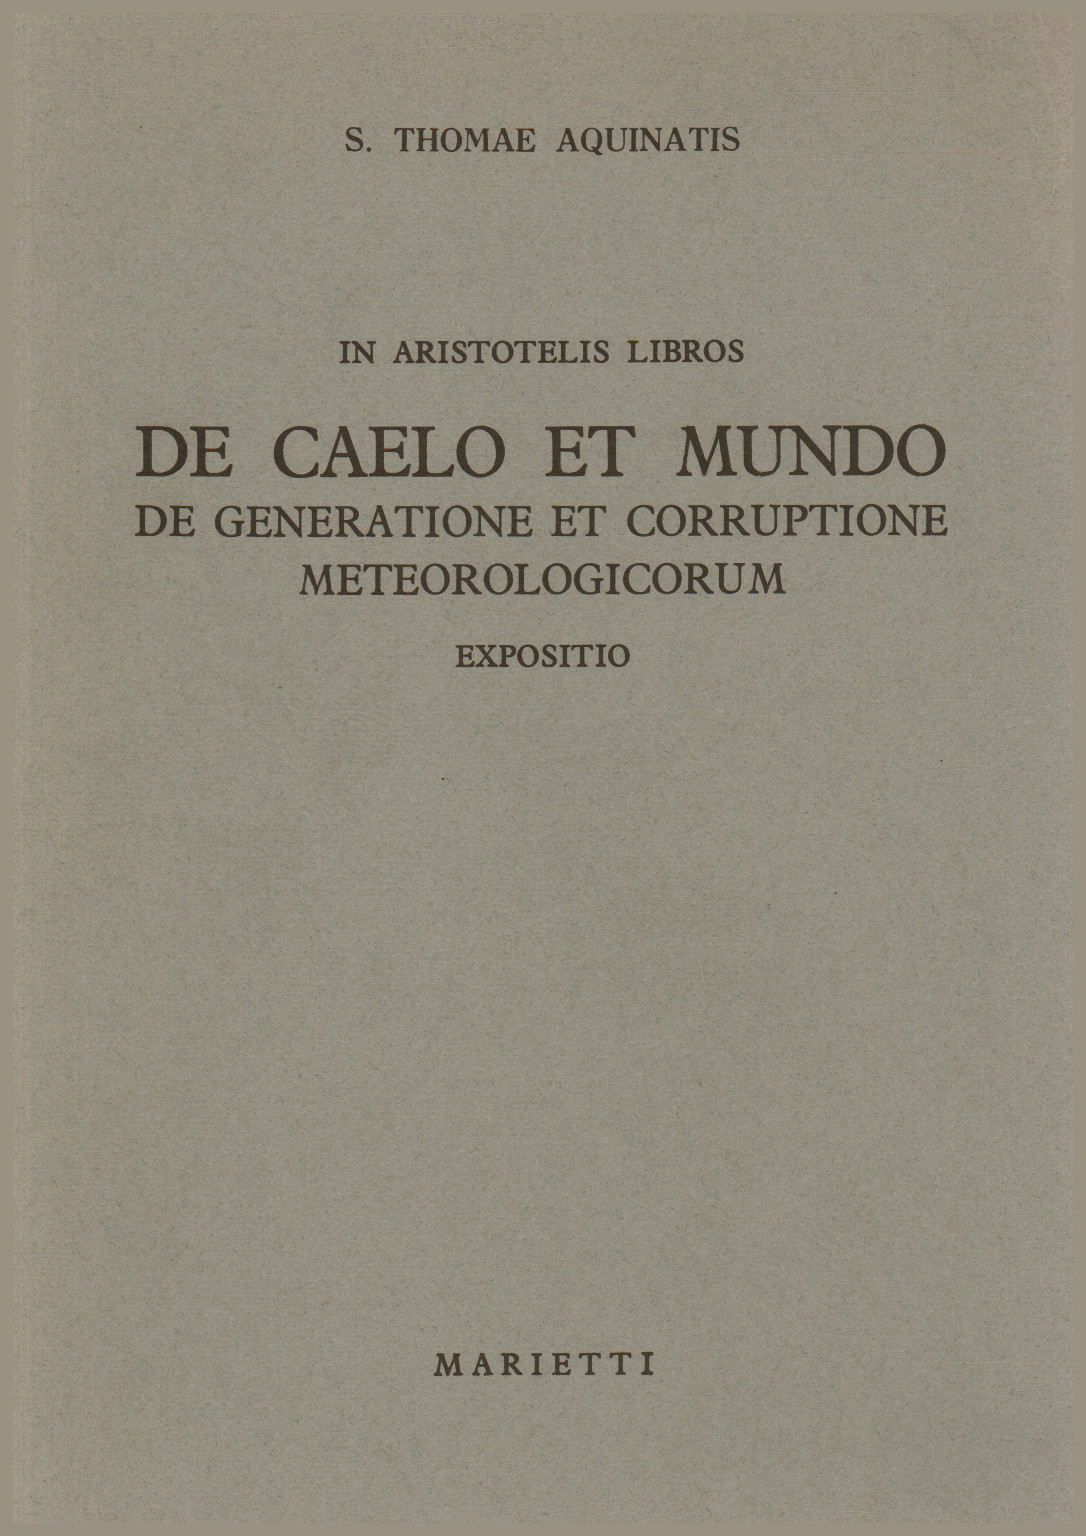 In Aristotelis libros de caelo et mundo de generat, s.a.